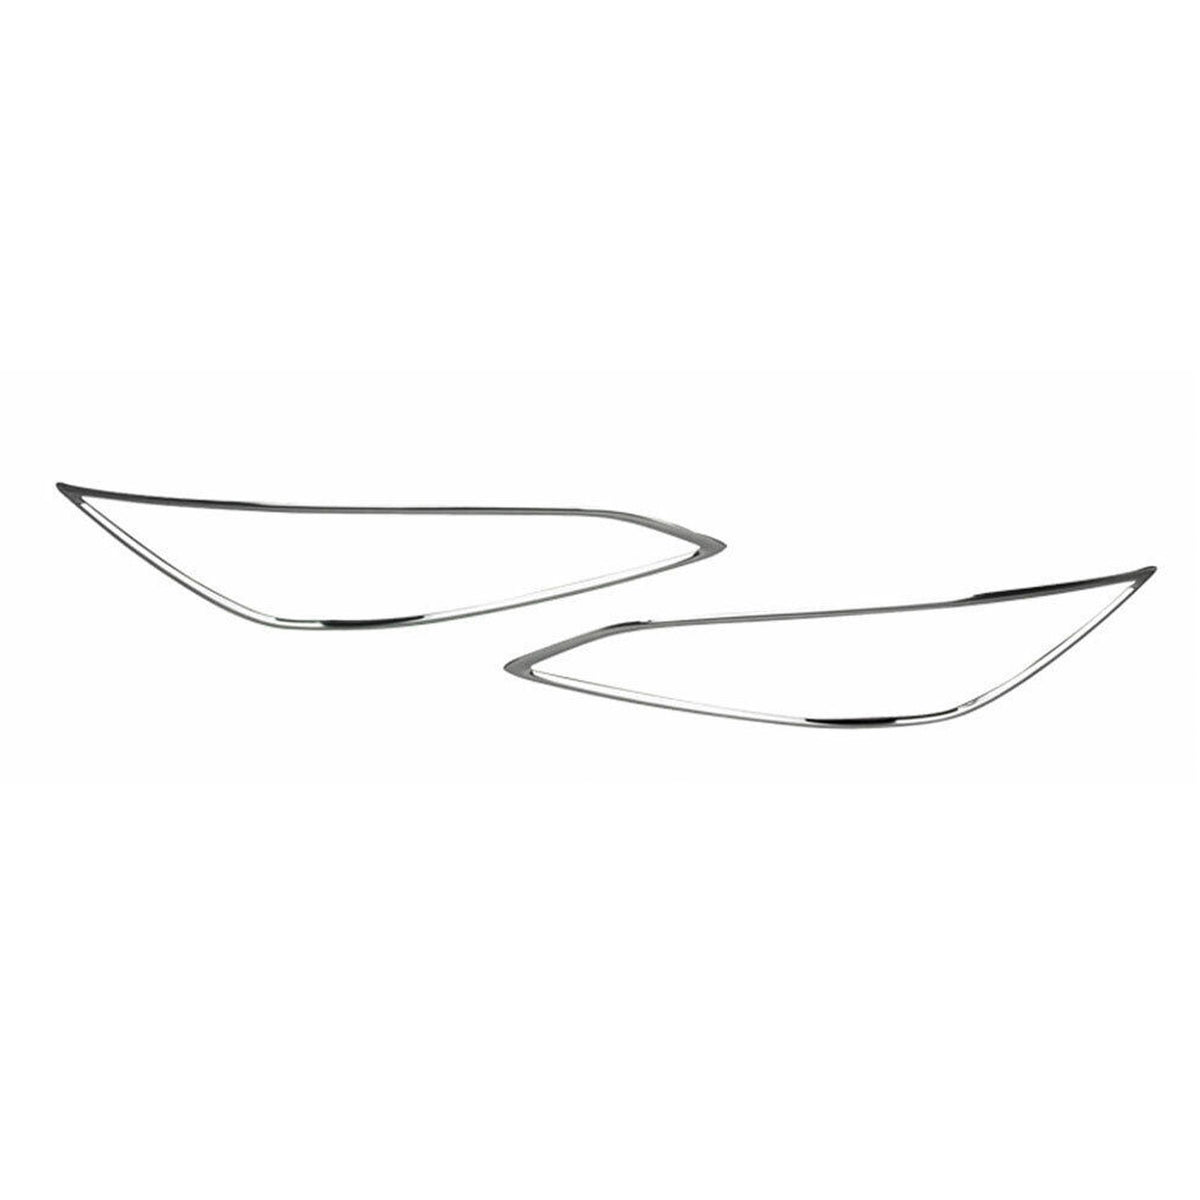 Nebelscheinwerfer Rahmen Umrandung für Hyundai i40 2011-2019 Edelstahl Silber 2x